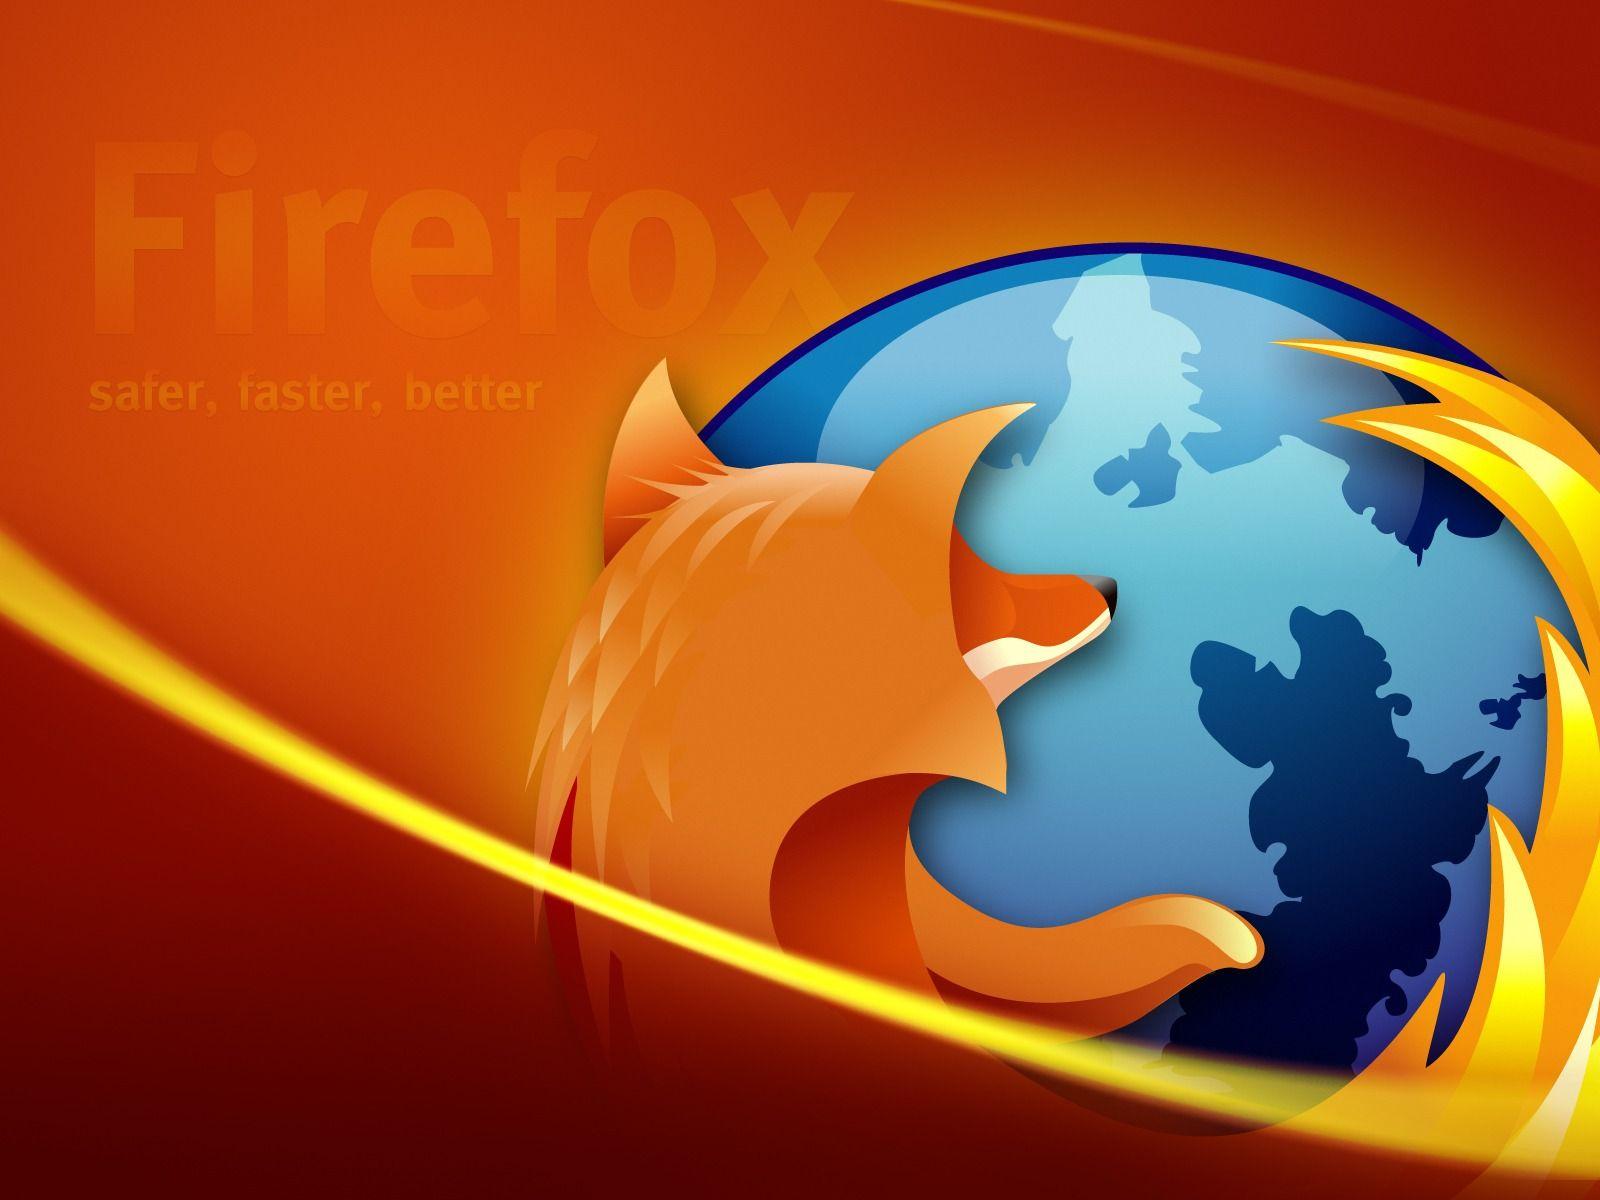 Safer Faster Better Wallpaper Firefox Computers Wallpaper in jpg